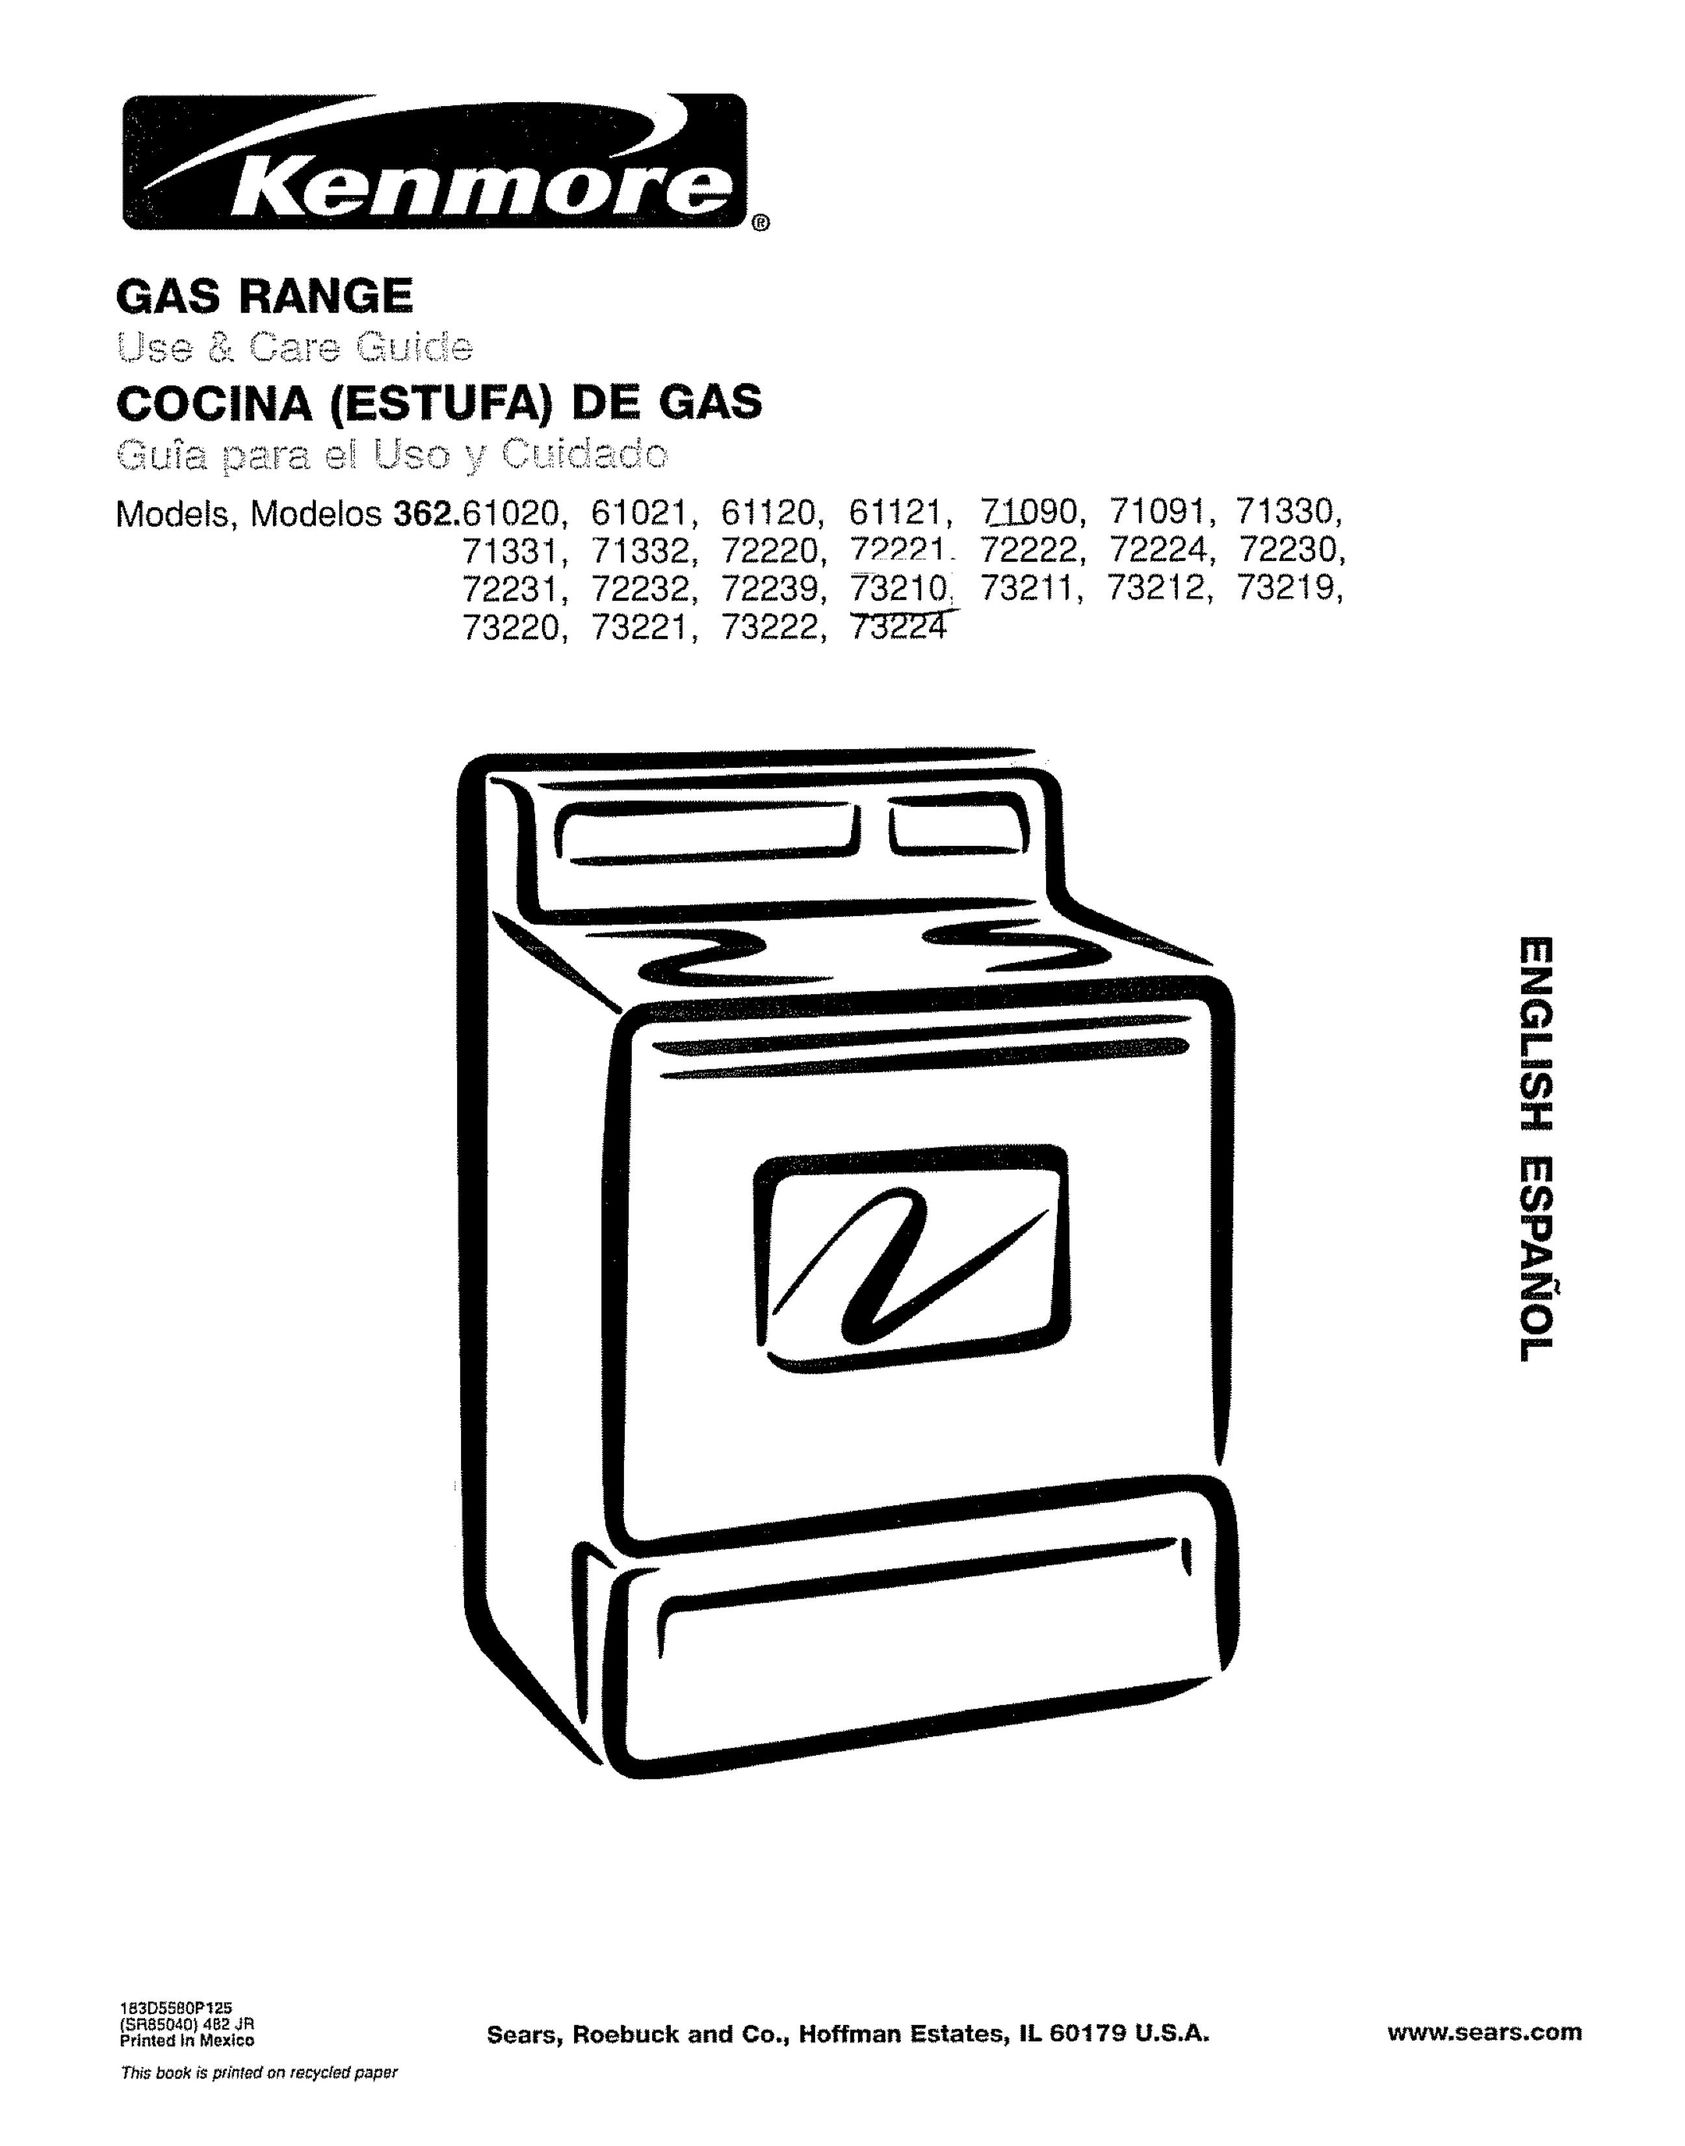 Kenmore 362.72232 Range User Manual